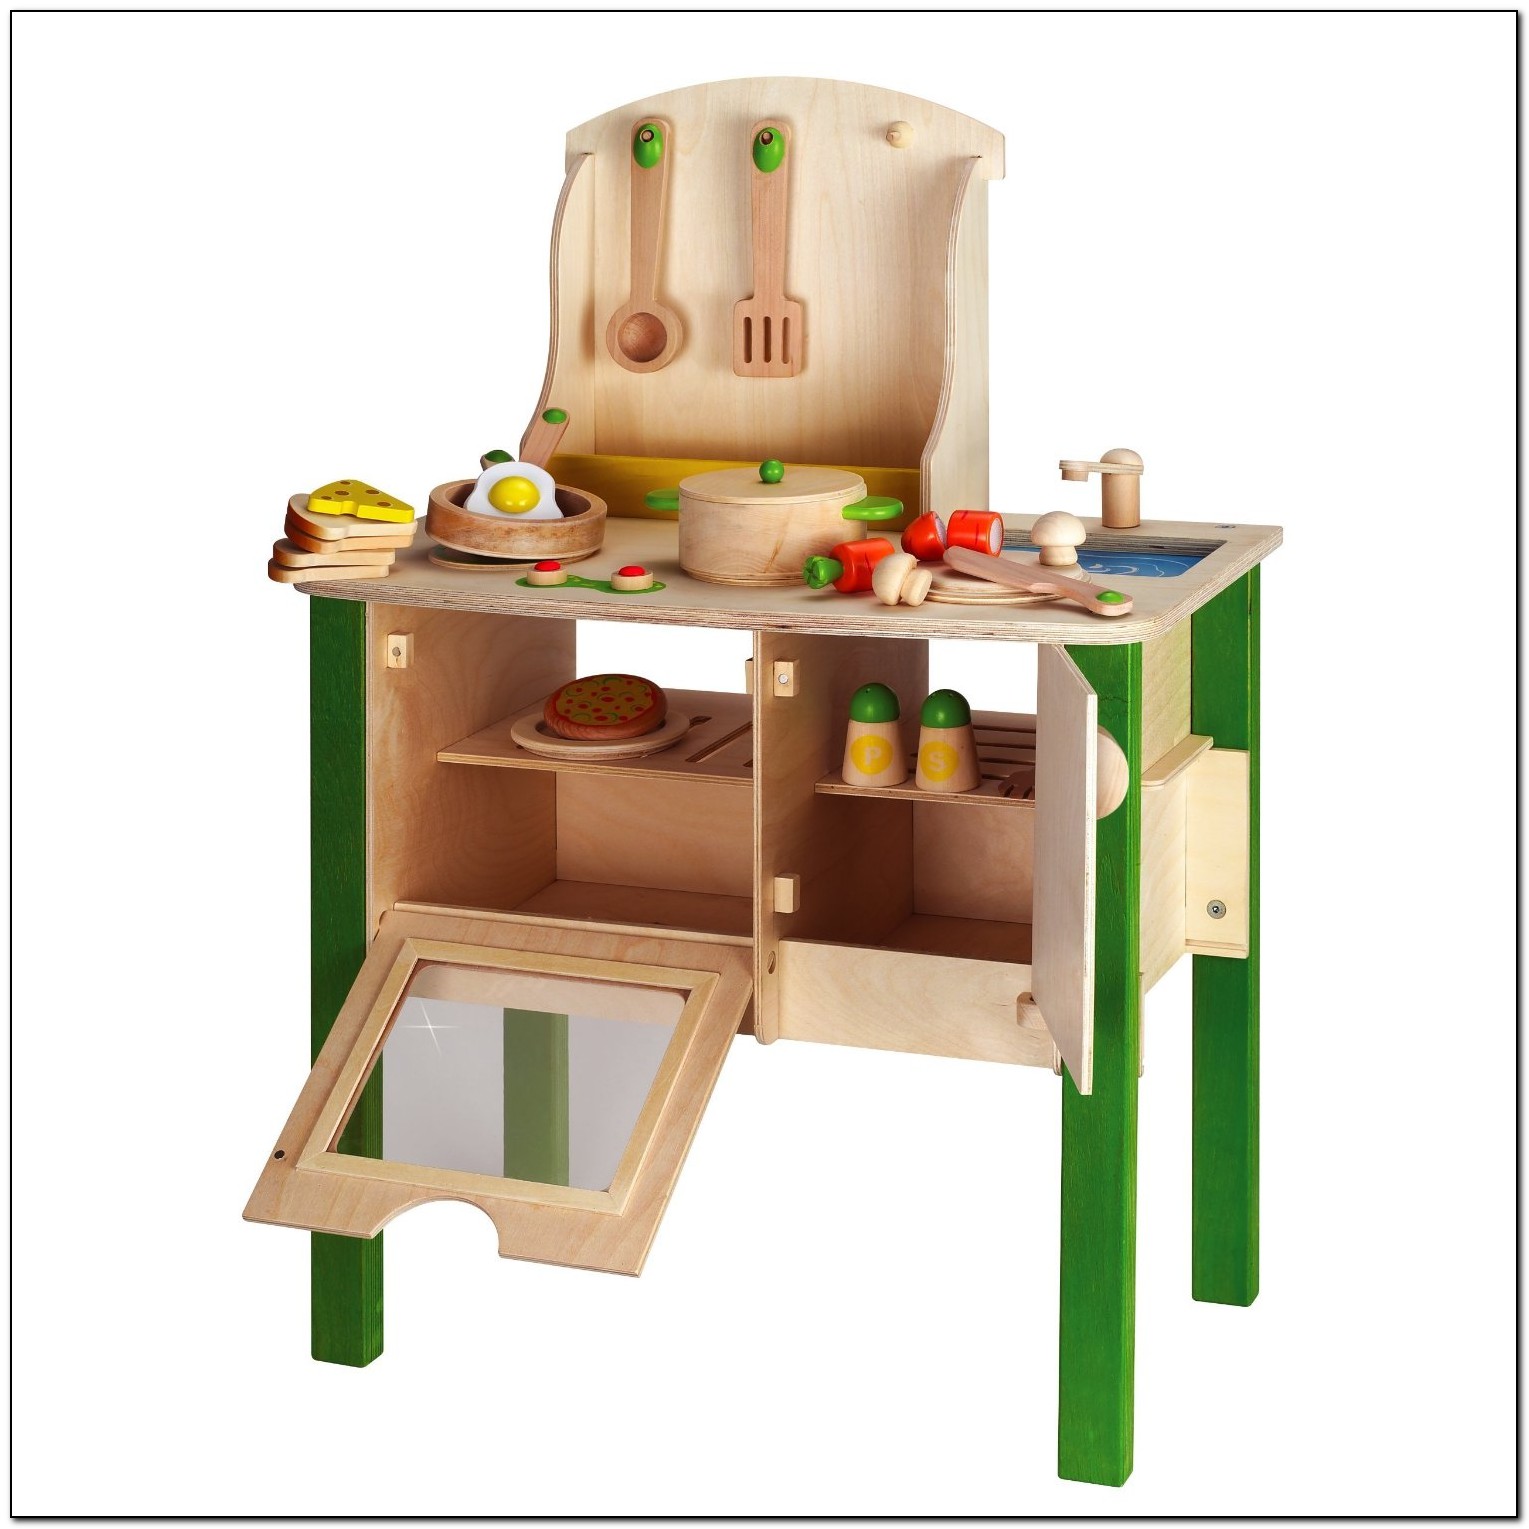 Kids Kitchen Sets Target - Kitchen : Home Design Ideas #KVndRVLQ5W16759